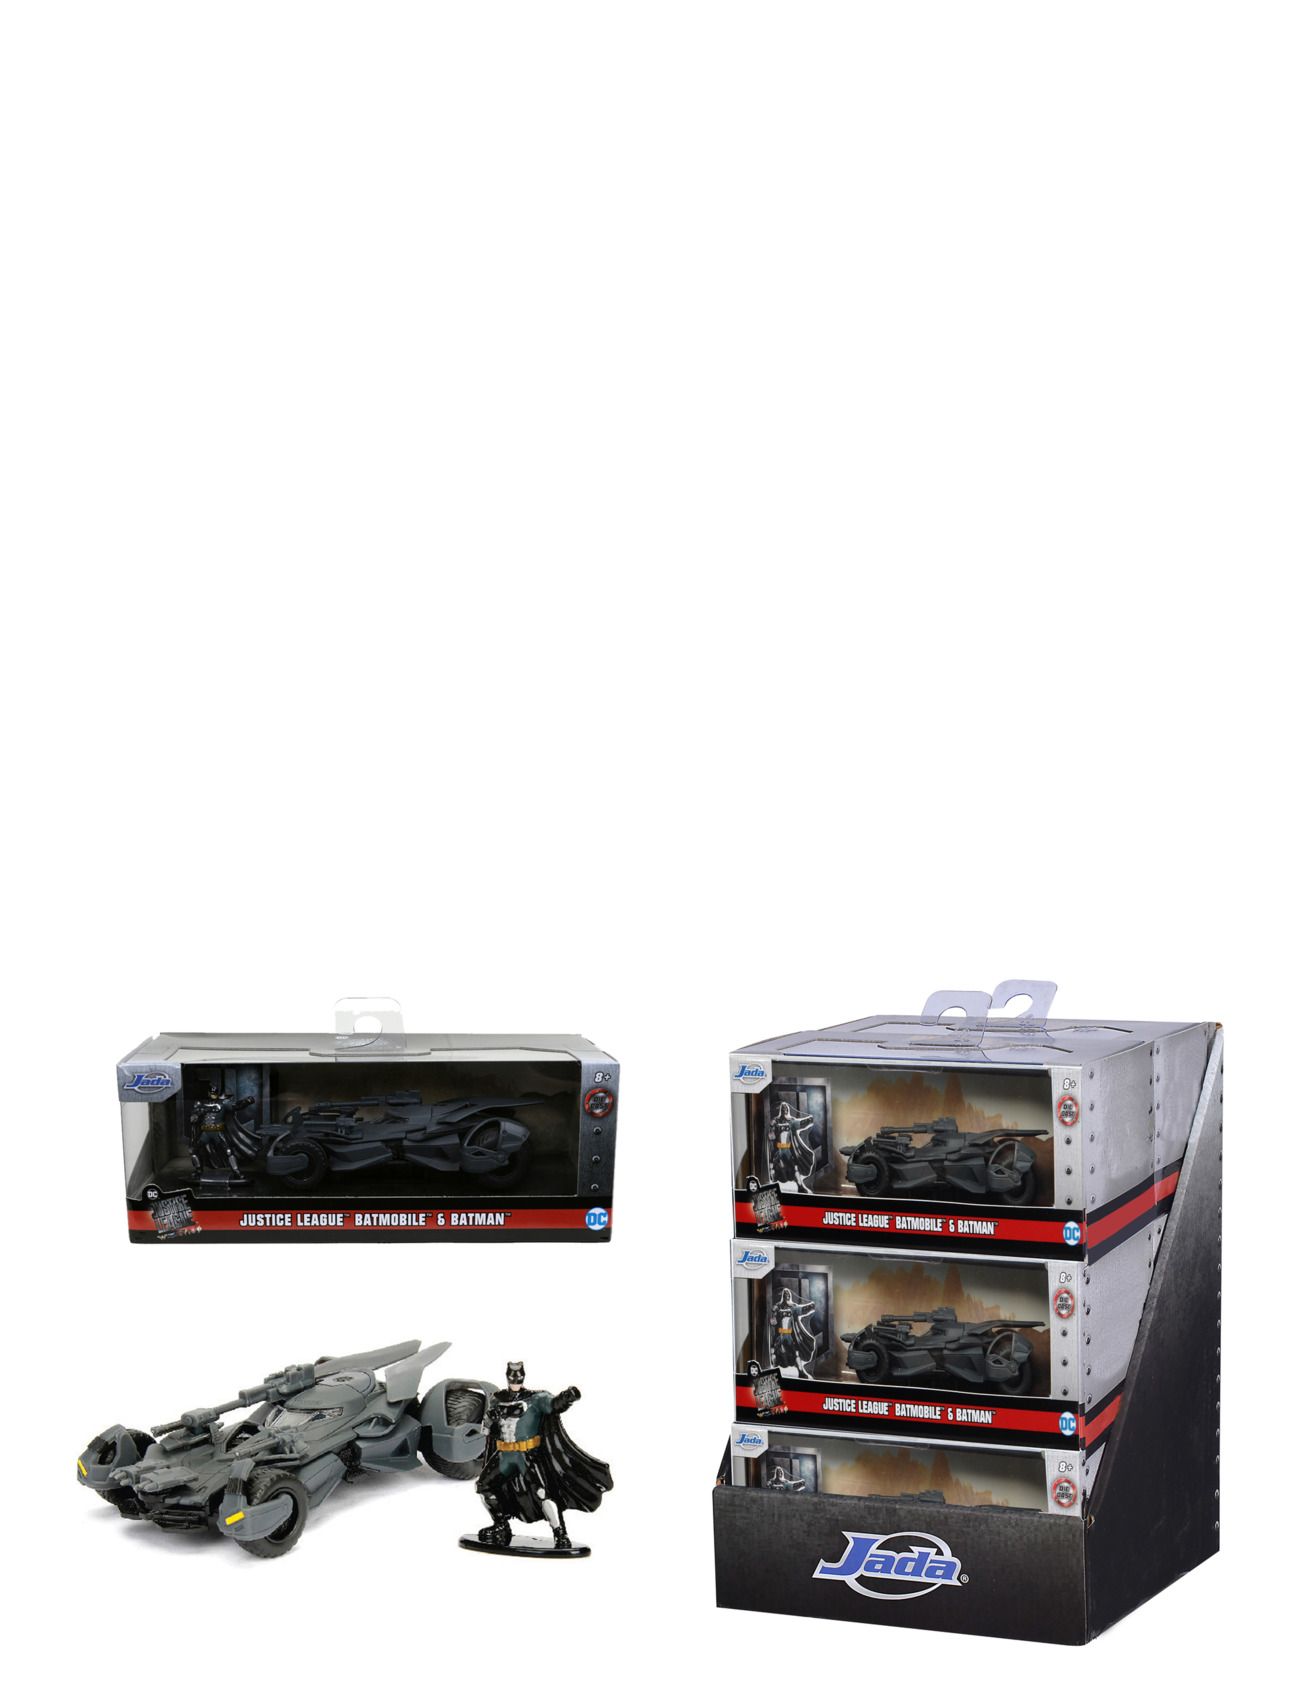 Batman Justice League Batmobile 1:32 Toys Toy Cars & Vehicles Toy Cars Black Jada Toys